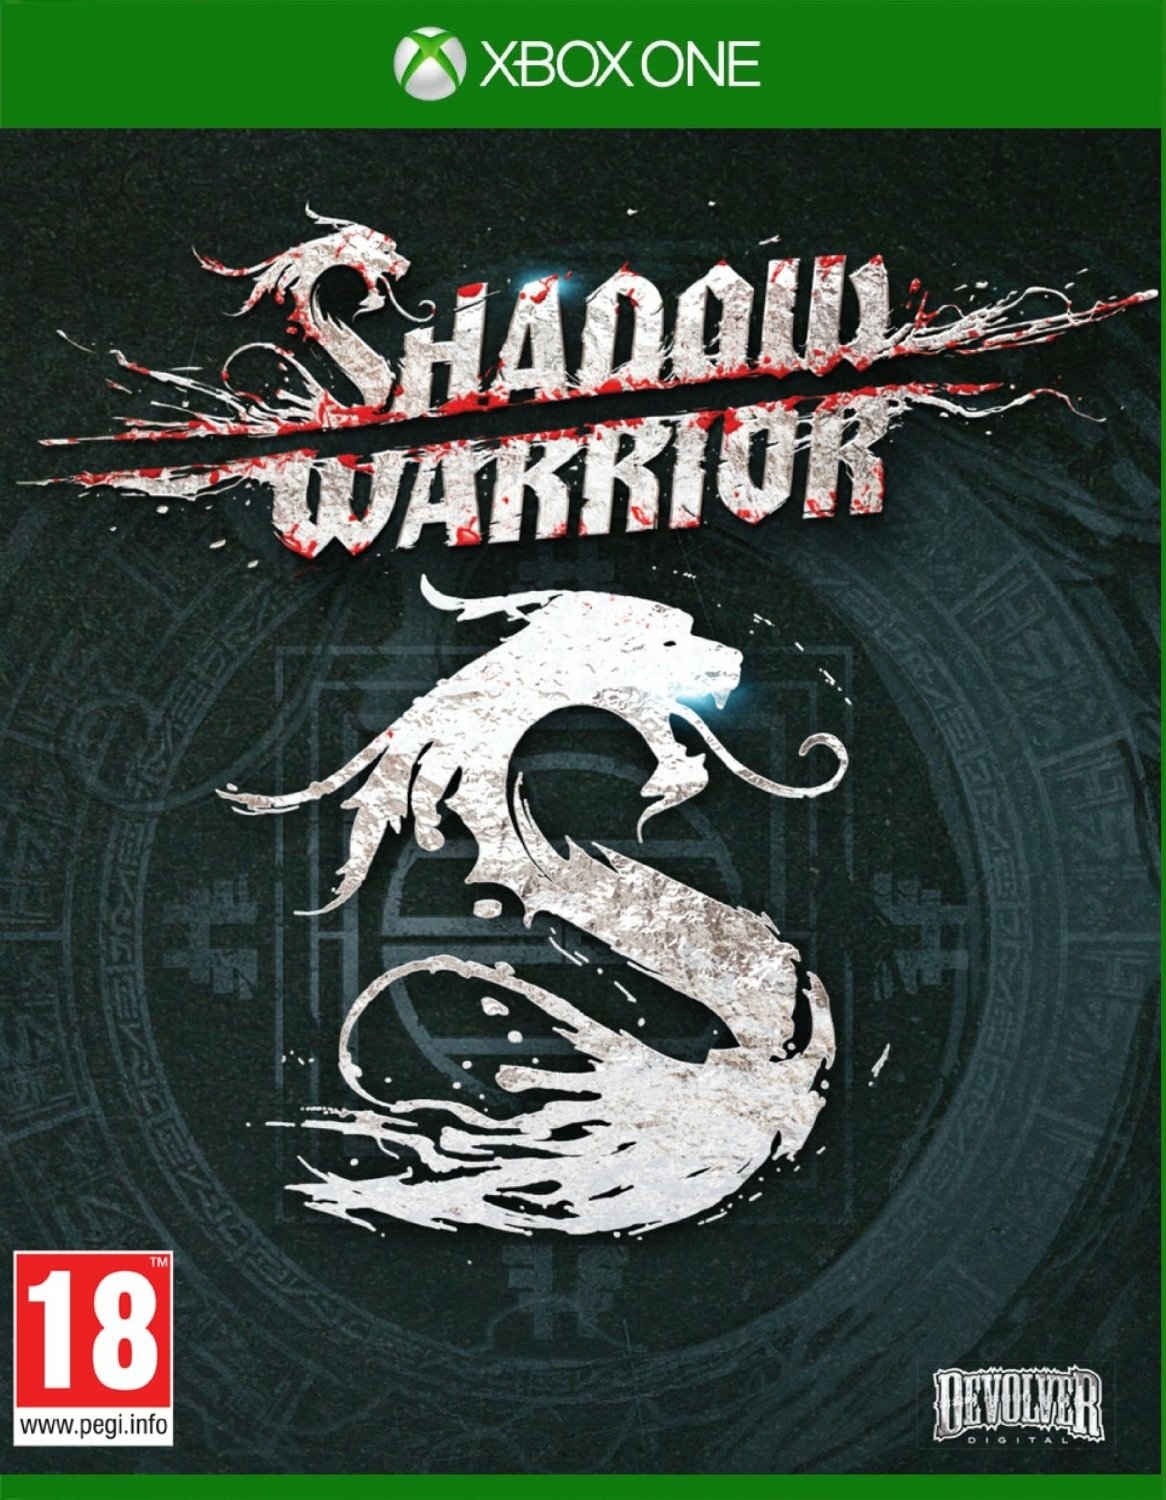 download free shadow warrior 3 xbox series x